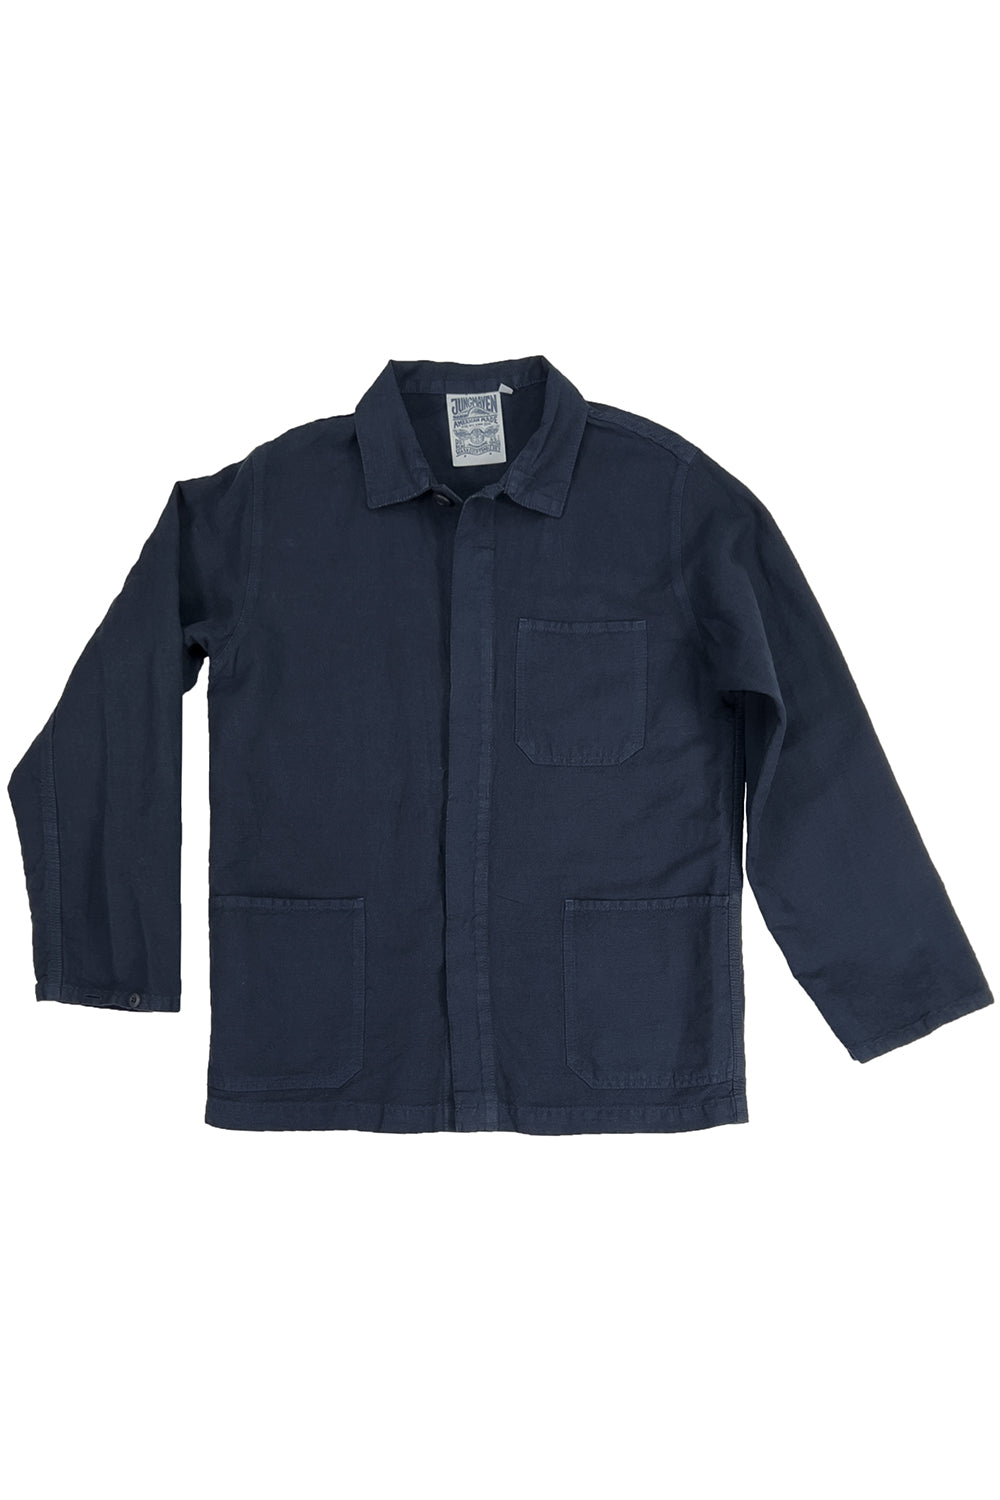 Cascade Jacket | Jungmaven Hemp Clothing & Accessories / Color: Navy